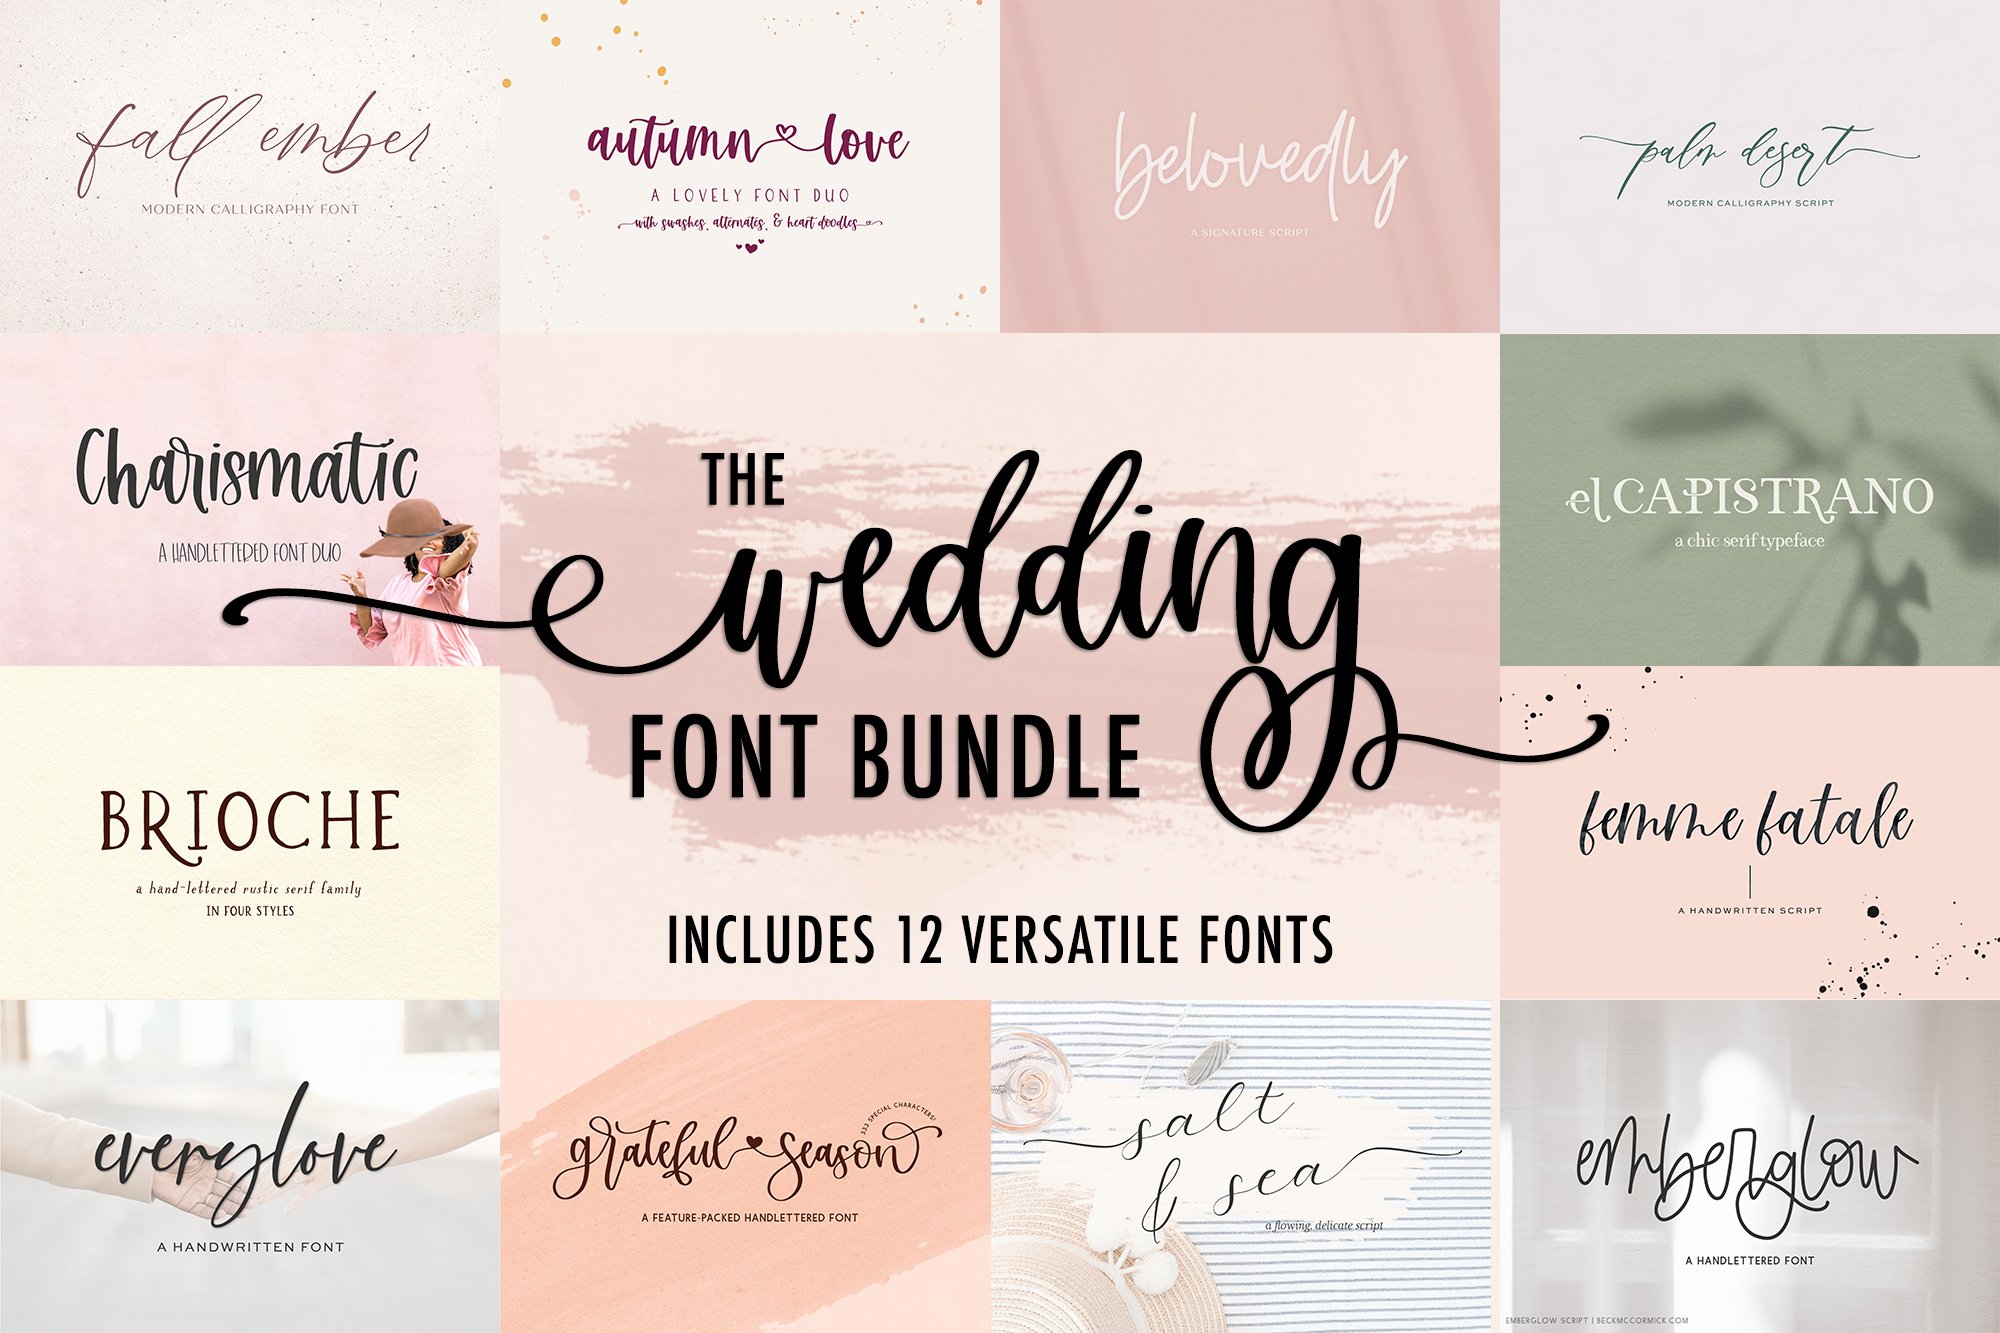 The Wedding Font Bundle cover image.